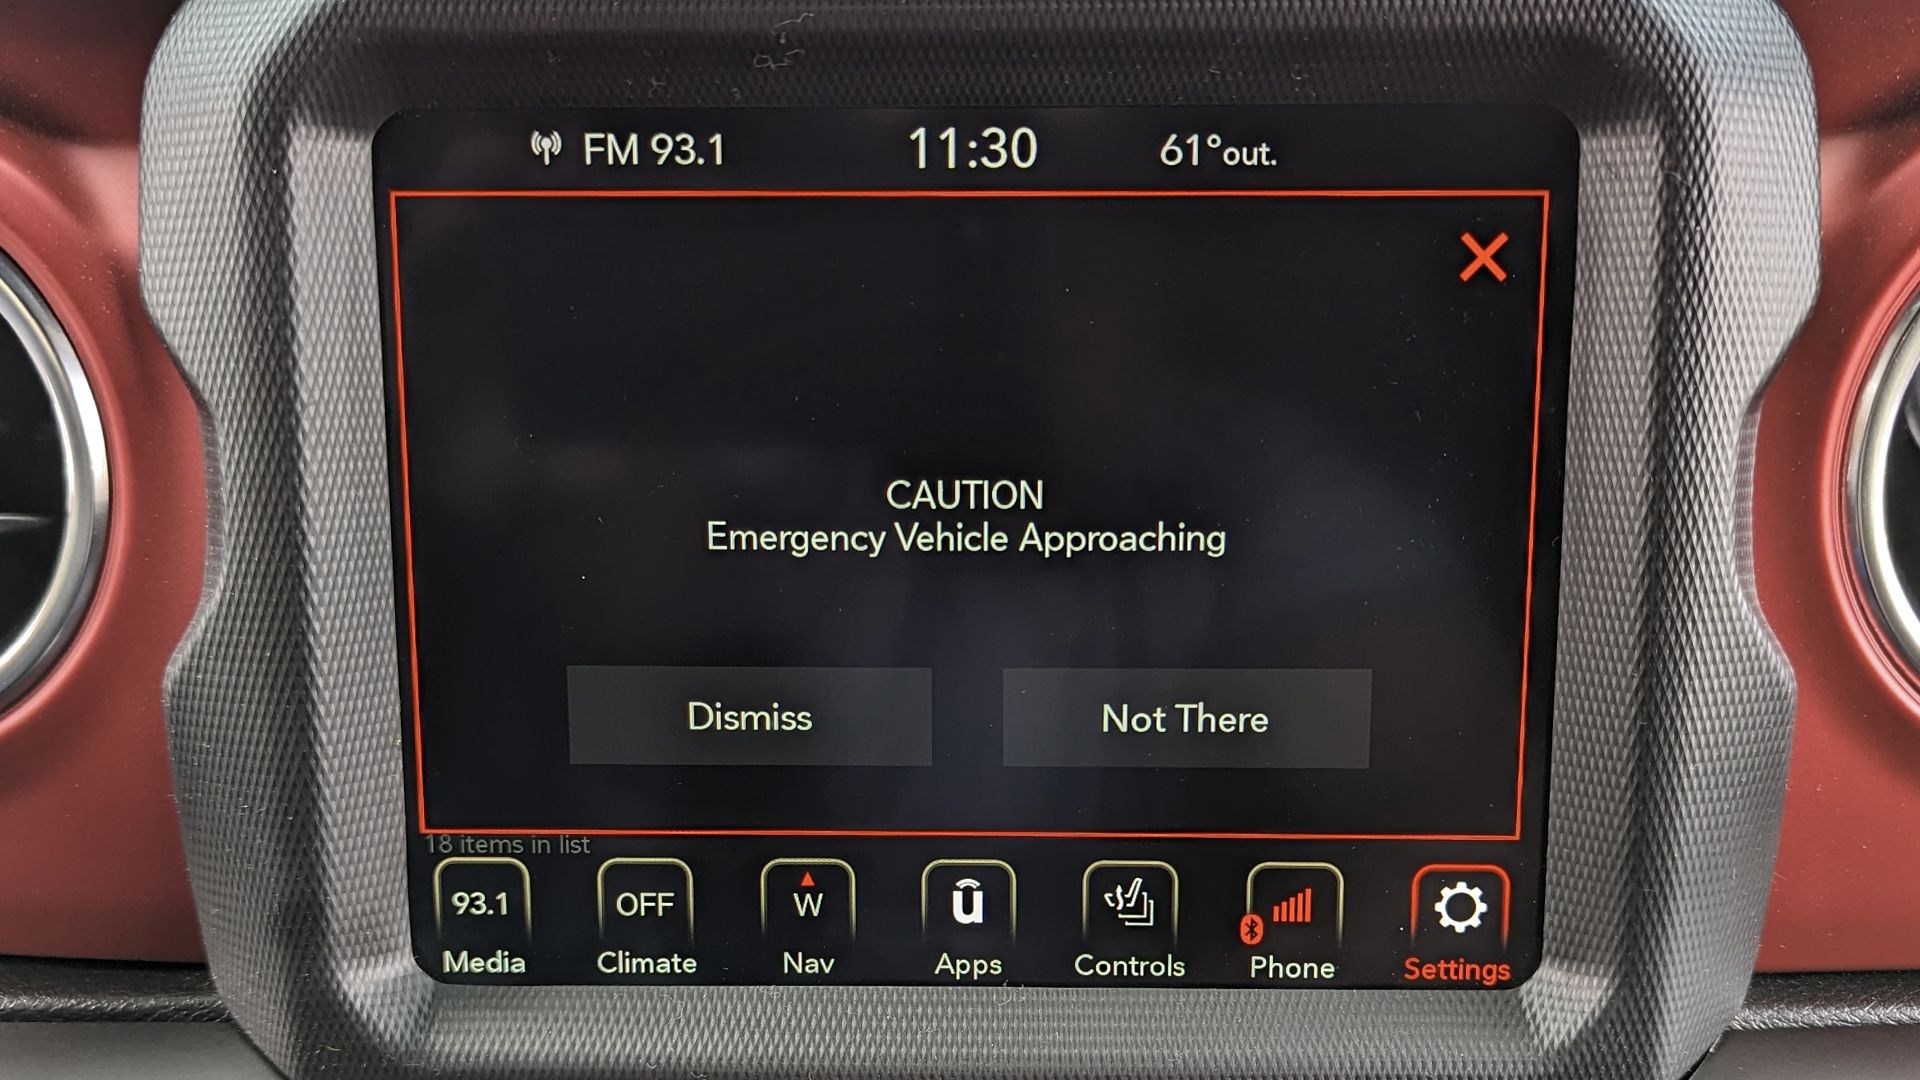 Stellantis' emergency vehicle alert system warns drivers of an emergency vehicle approaching.